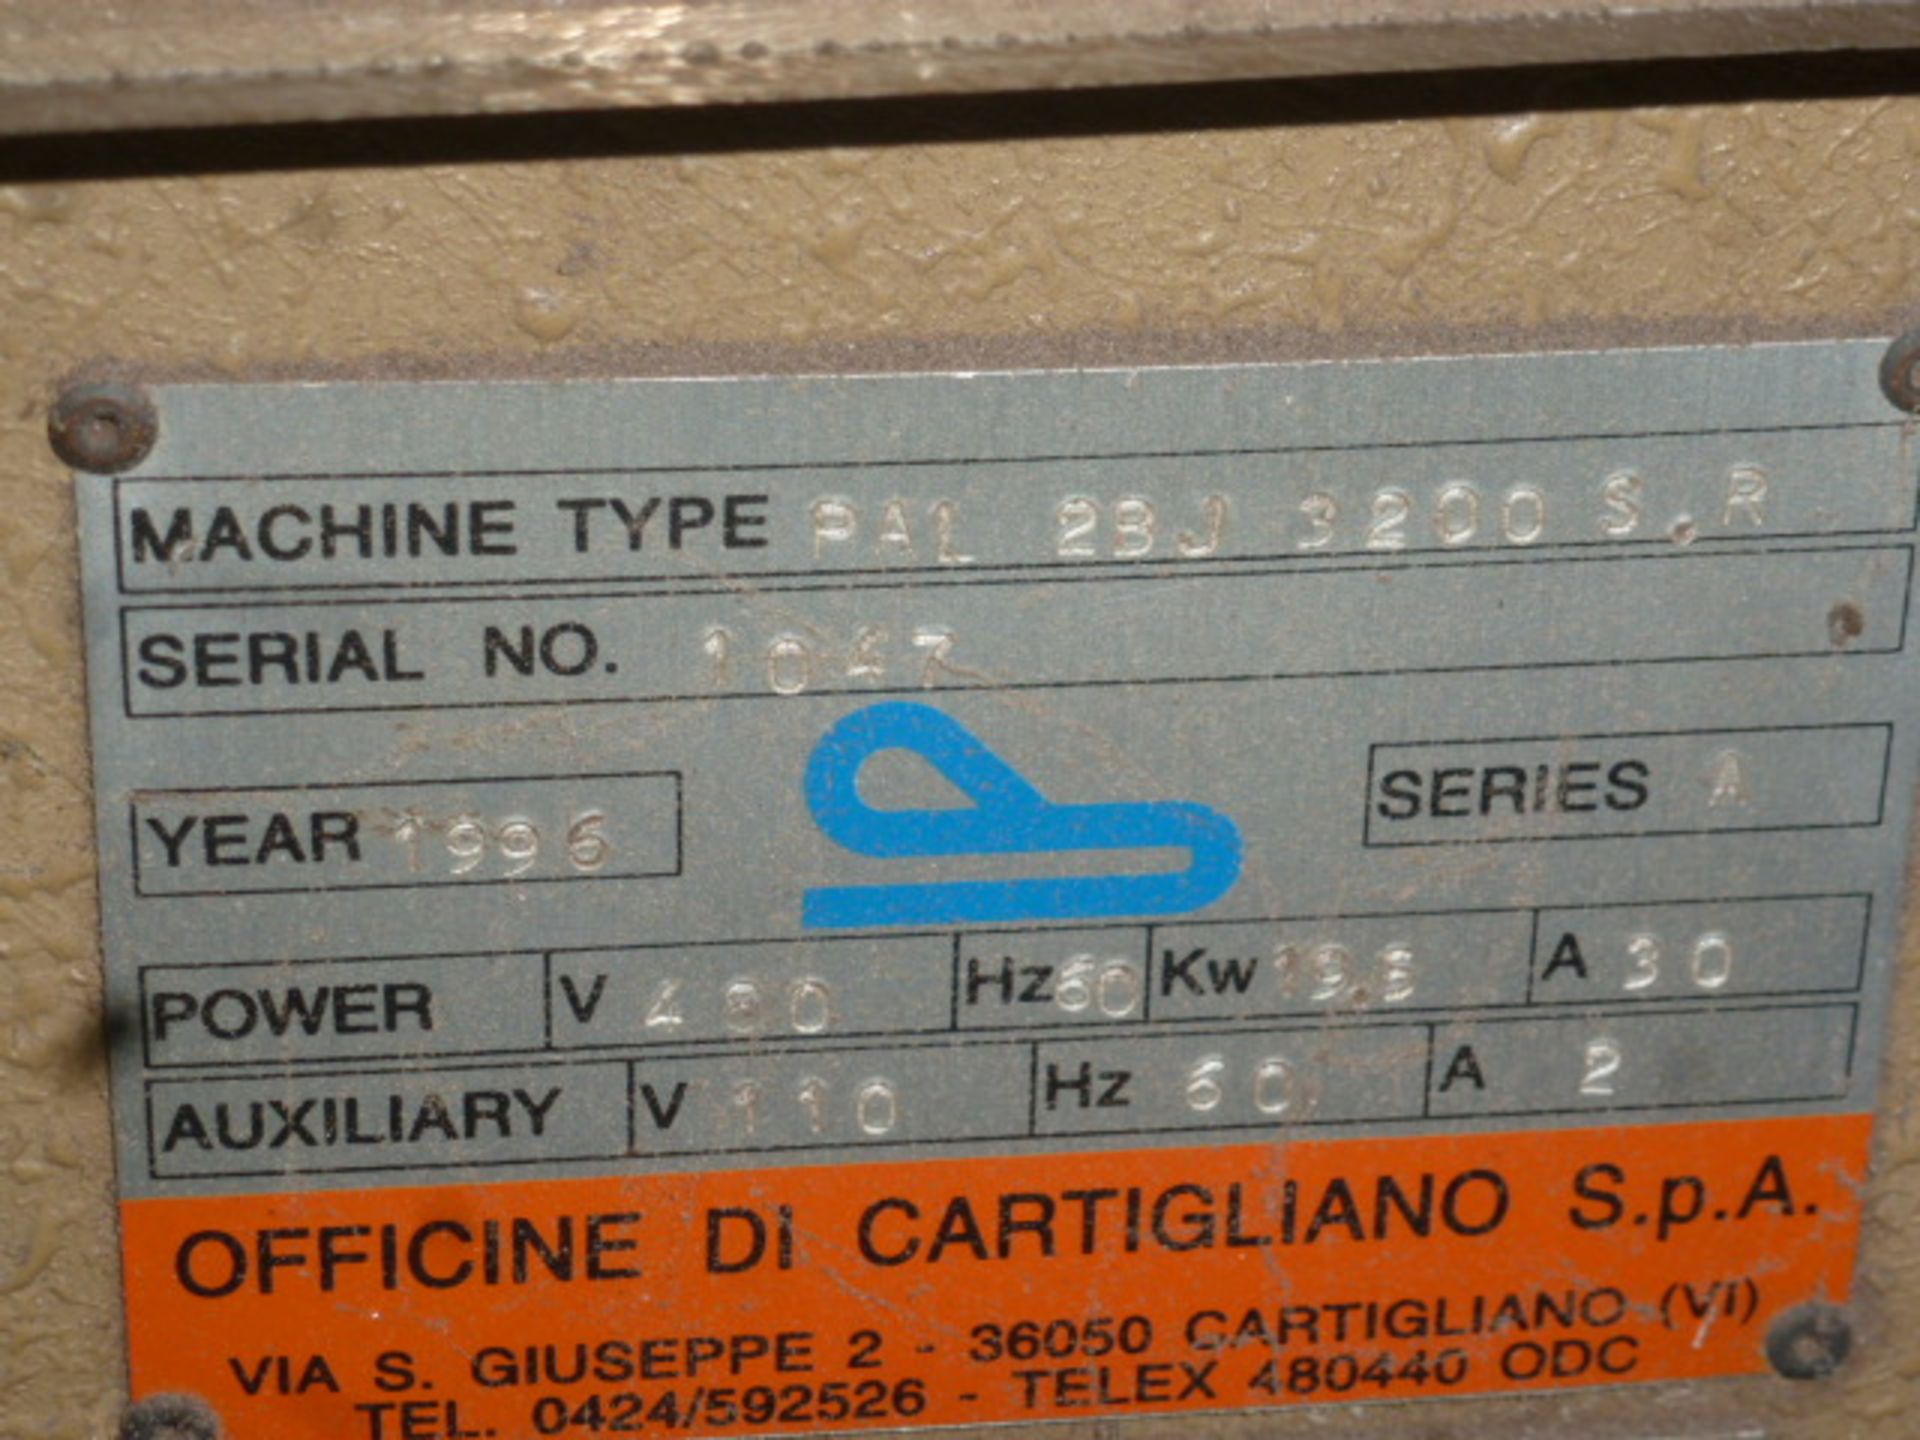 1996 Cartigliano Stacking Machine, m/n PAL 28J 3200, s/n 1047 - Image 4 of 4